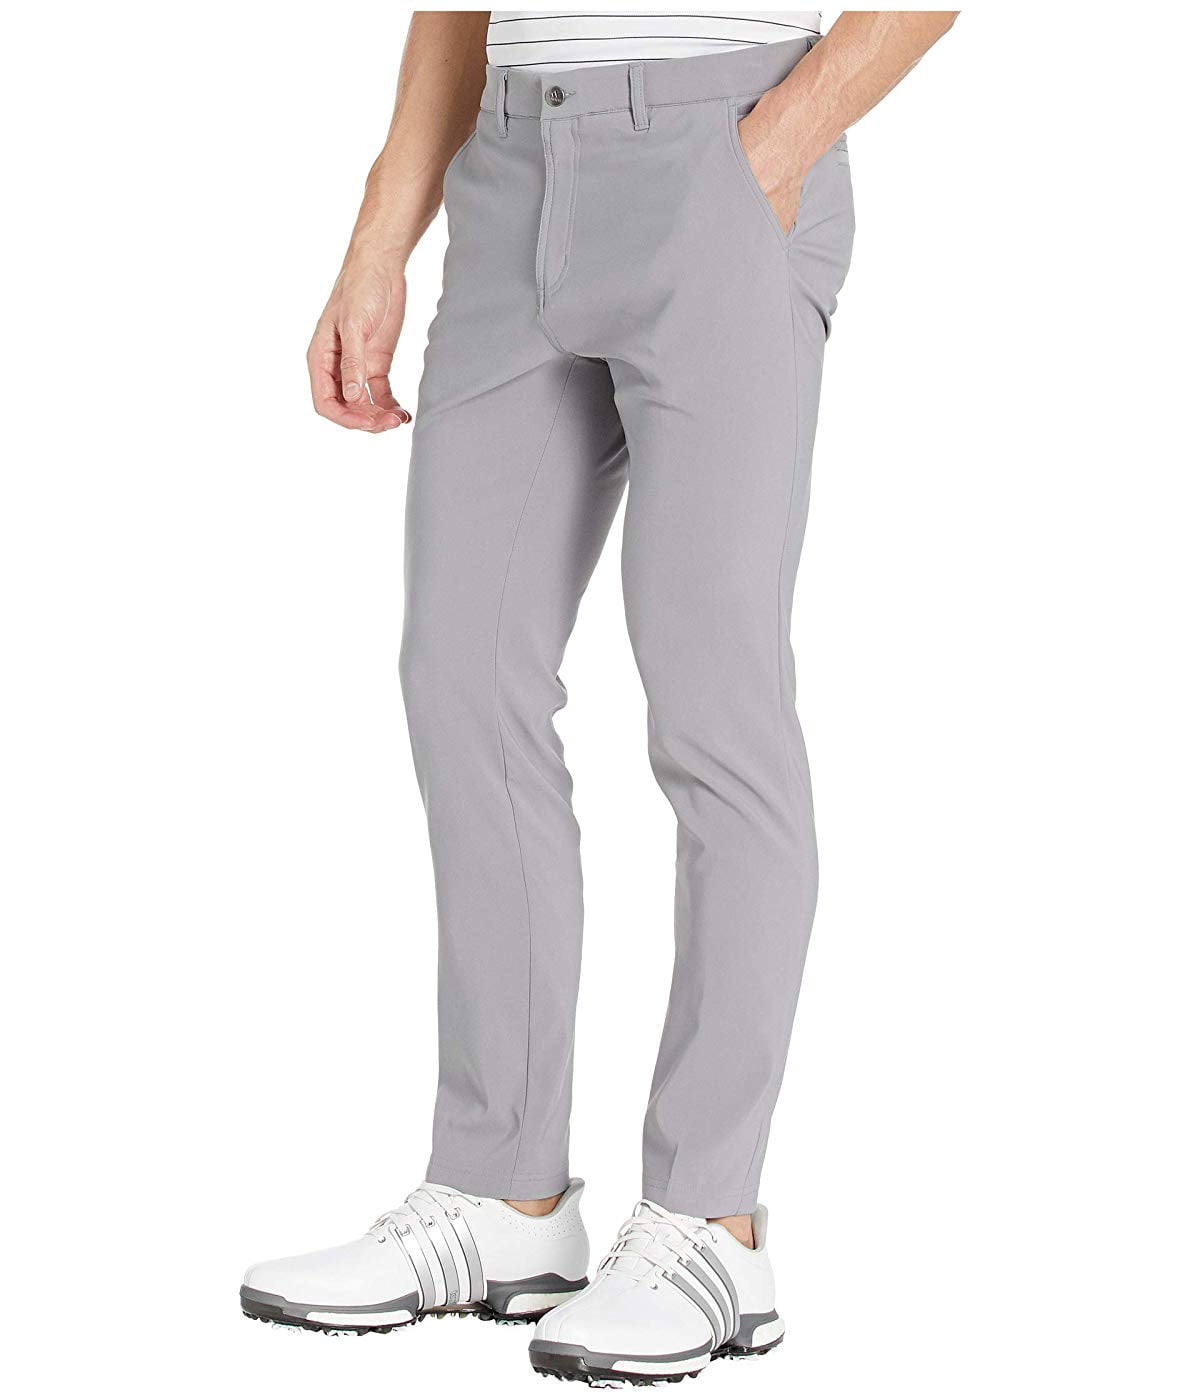 adidas Golf Ultimate Frostguard Pants Grey Three - Walmart.com ...